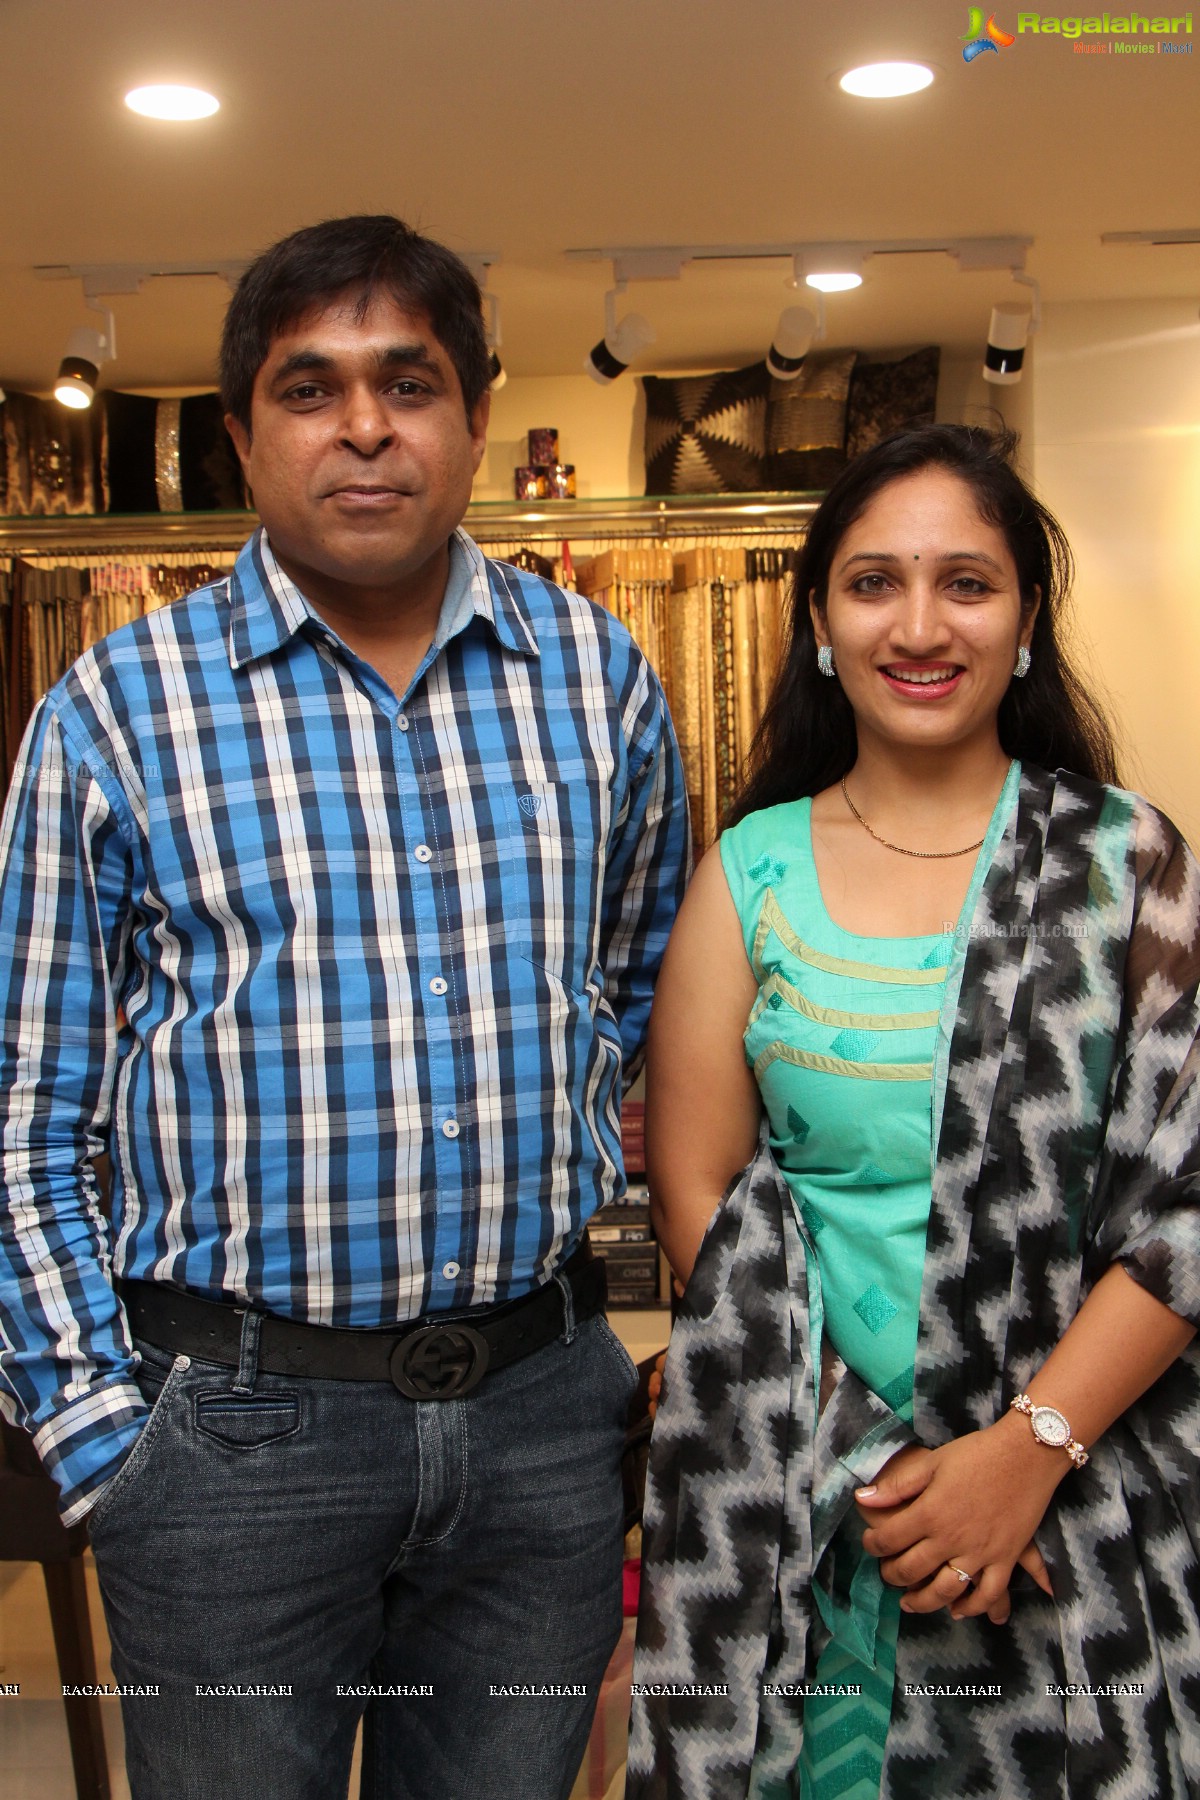 Darpan Furnishings Store Launch, Hyderabad